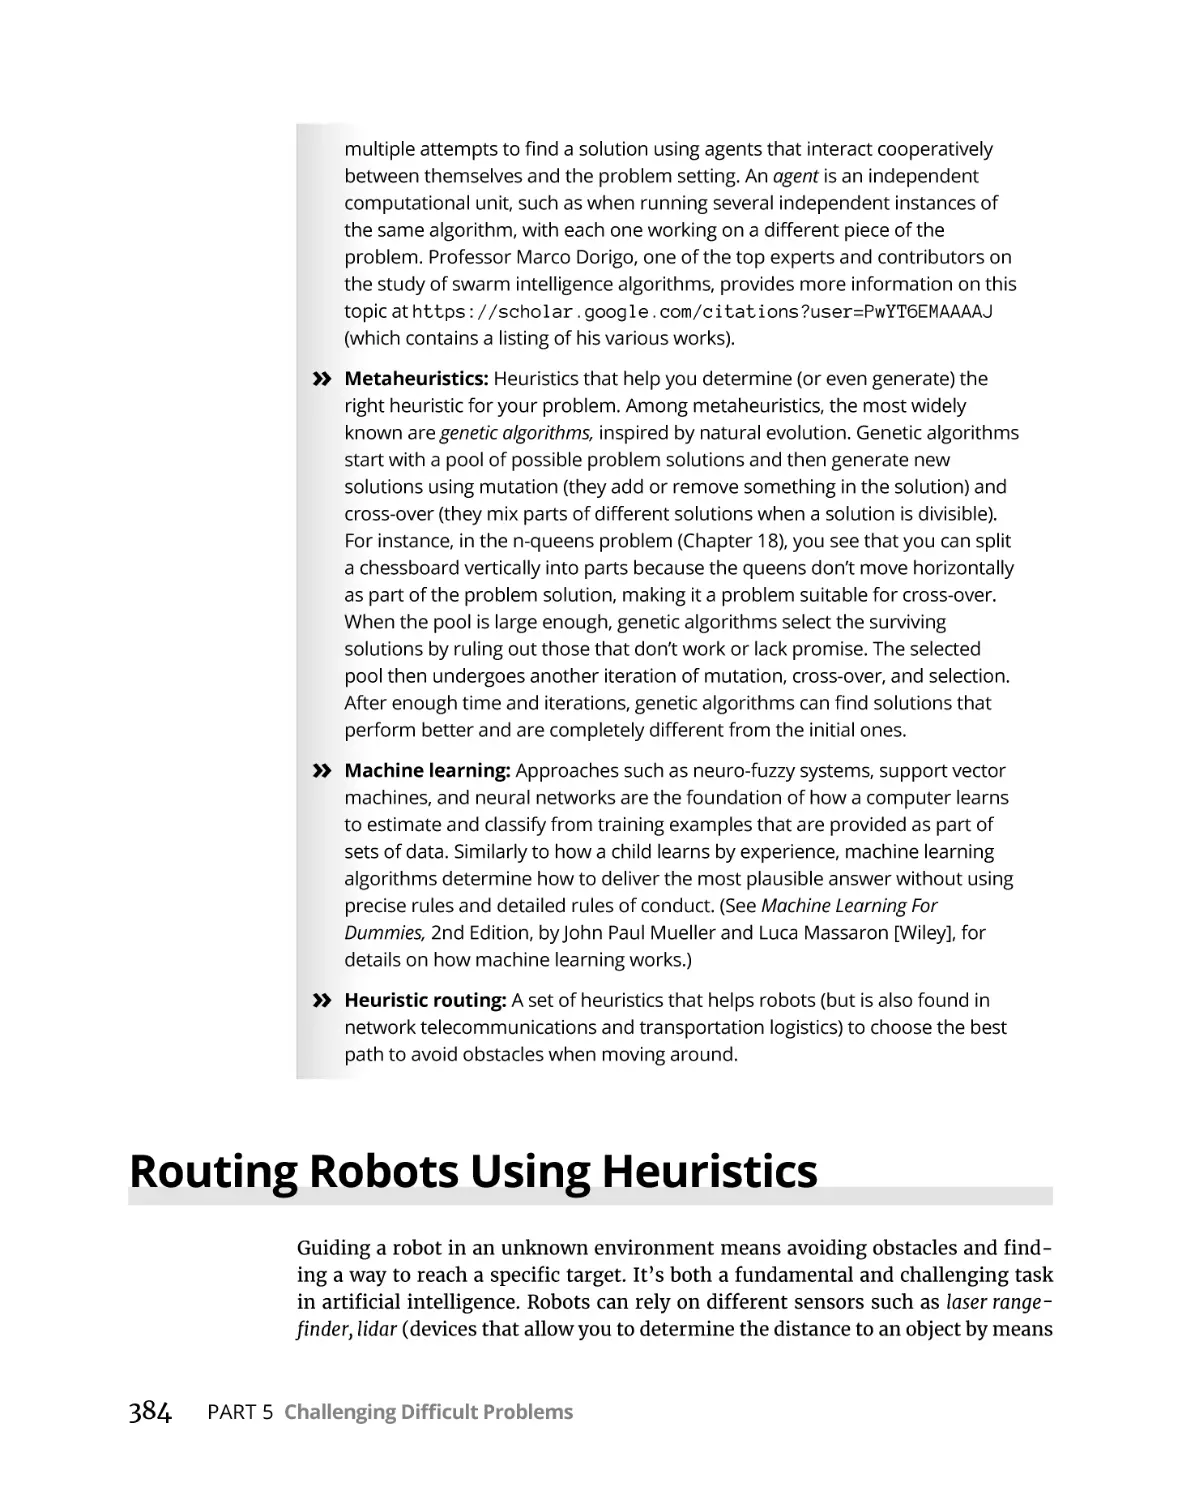 Routing Robots Using Heuristics